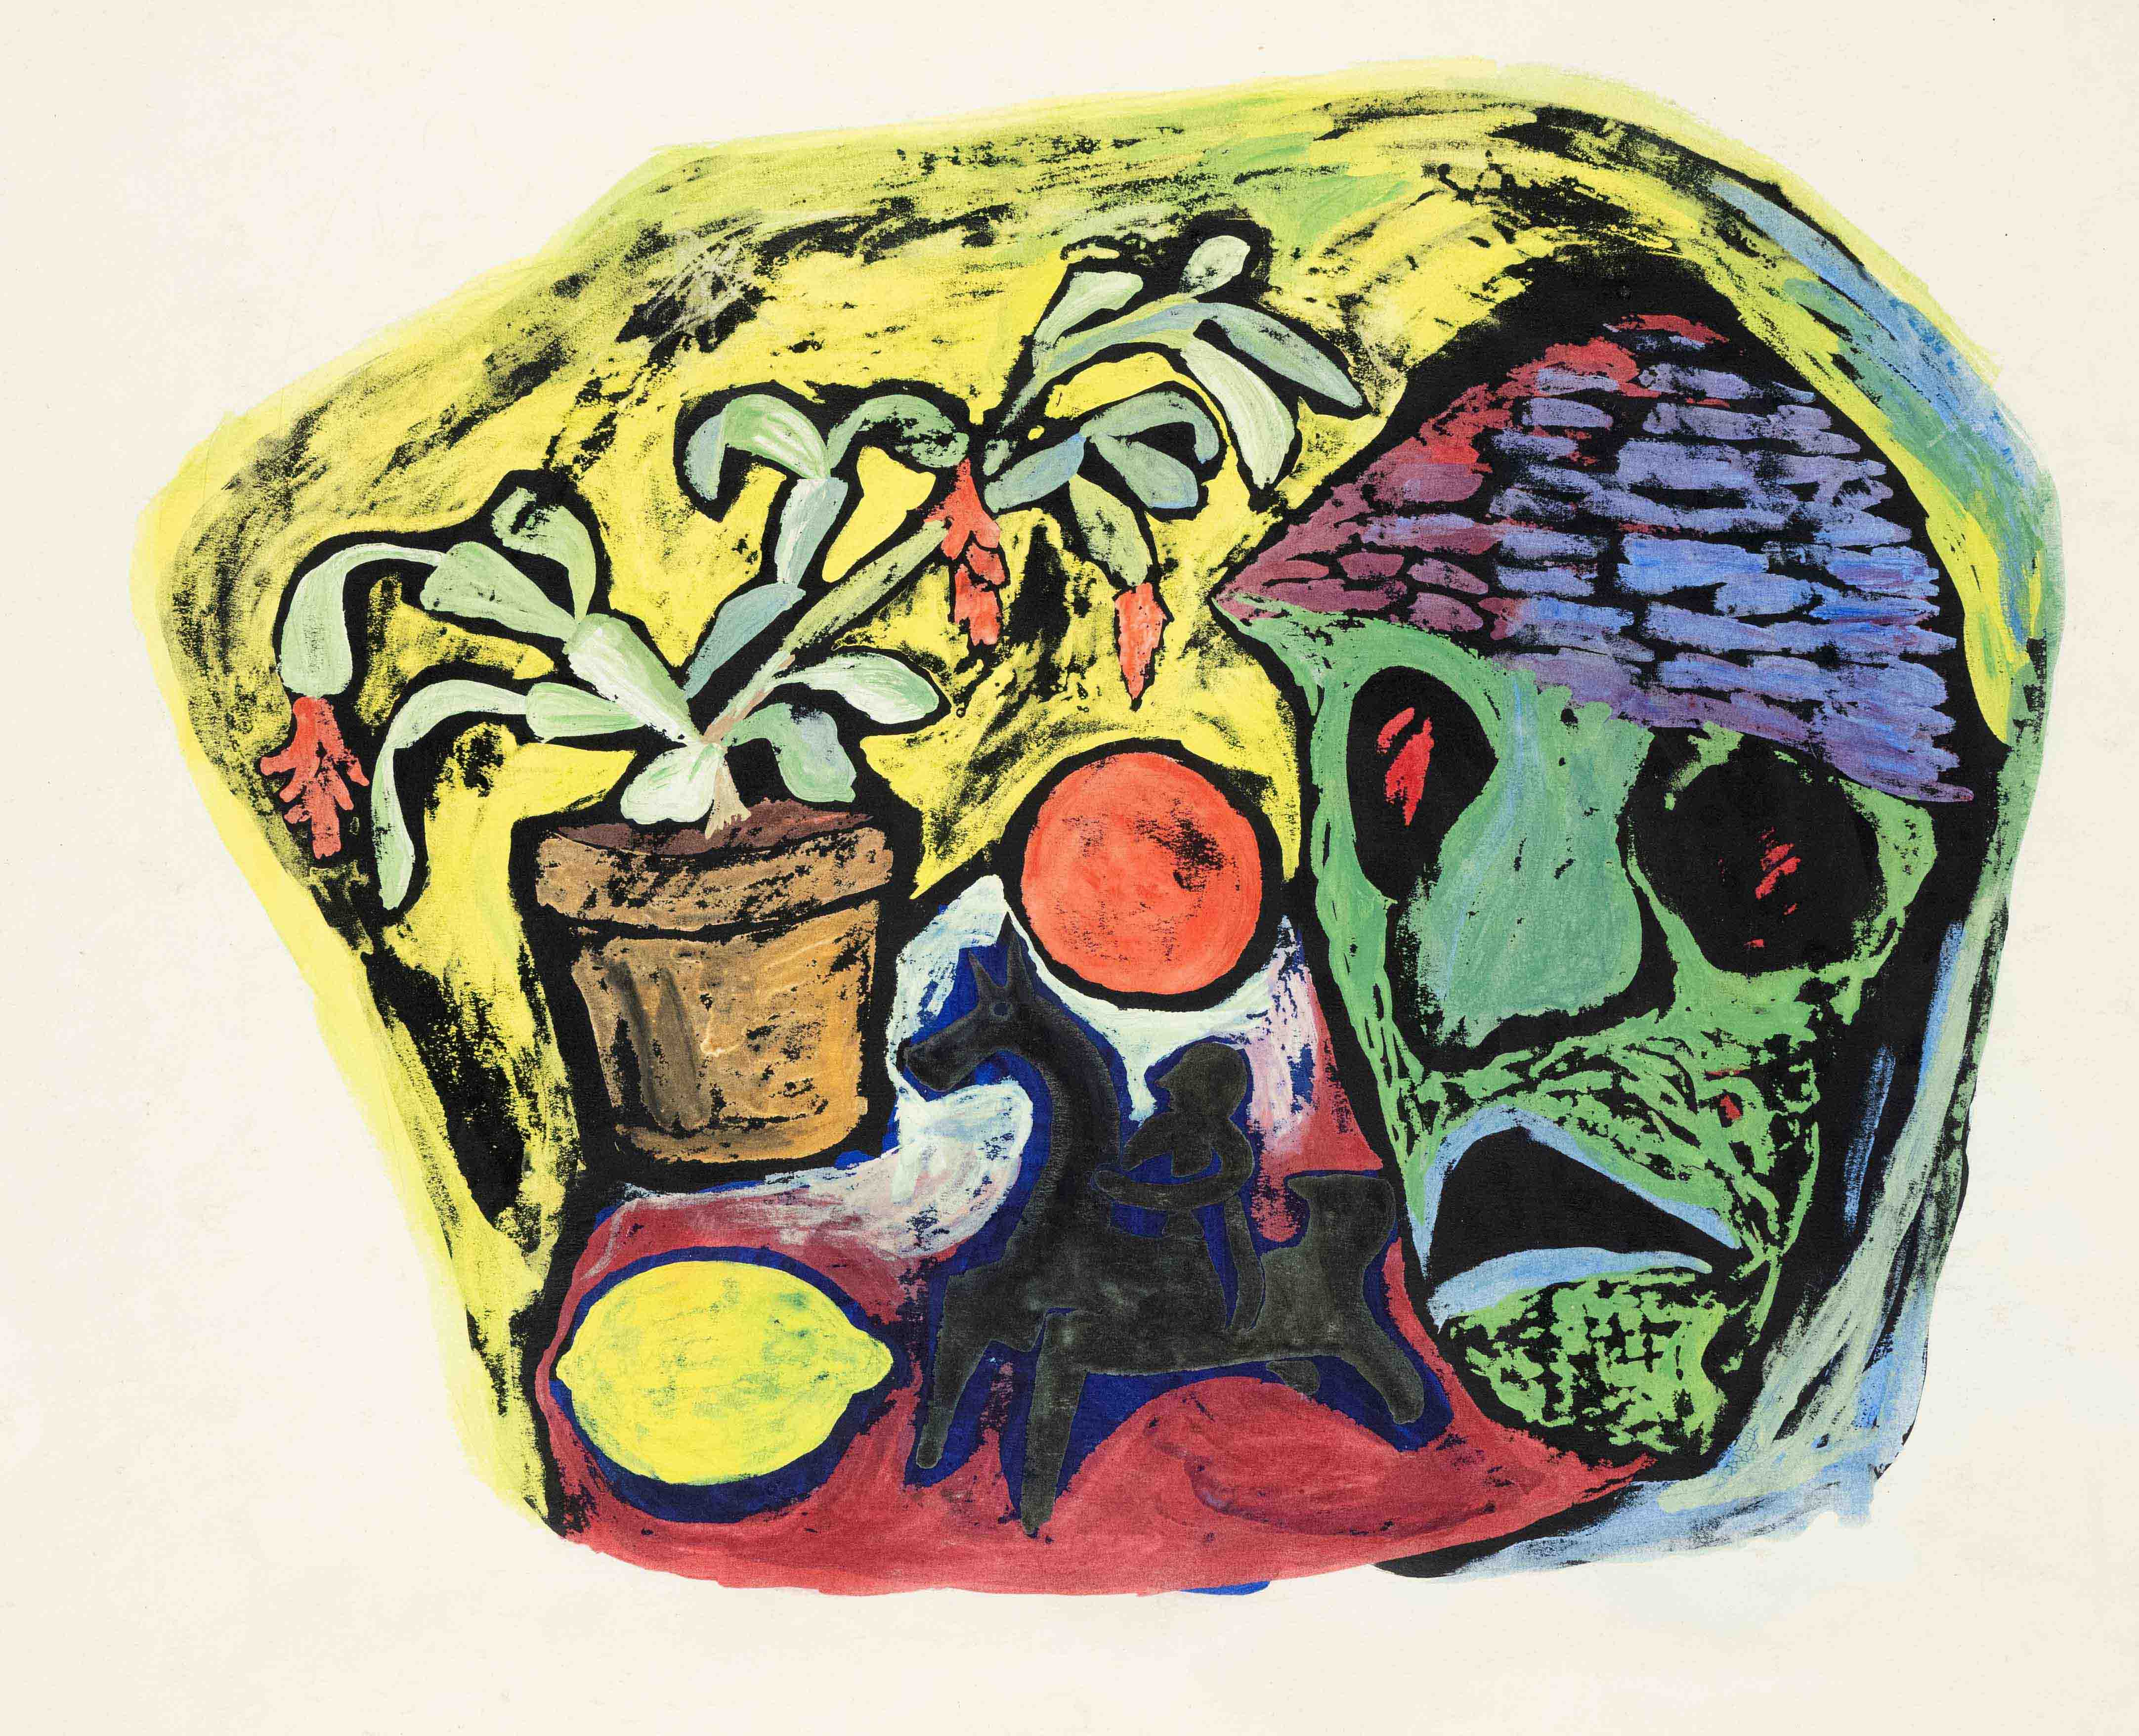 Fritz Kreidt (1936-2020), German painter and graphic artist, studied at the Düsseldorf Art Academy